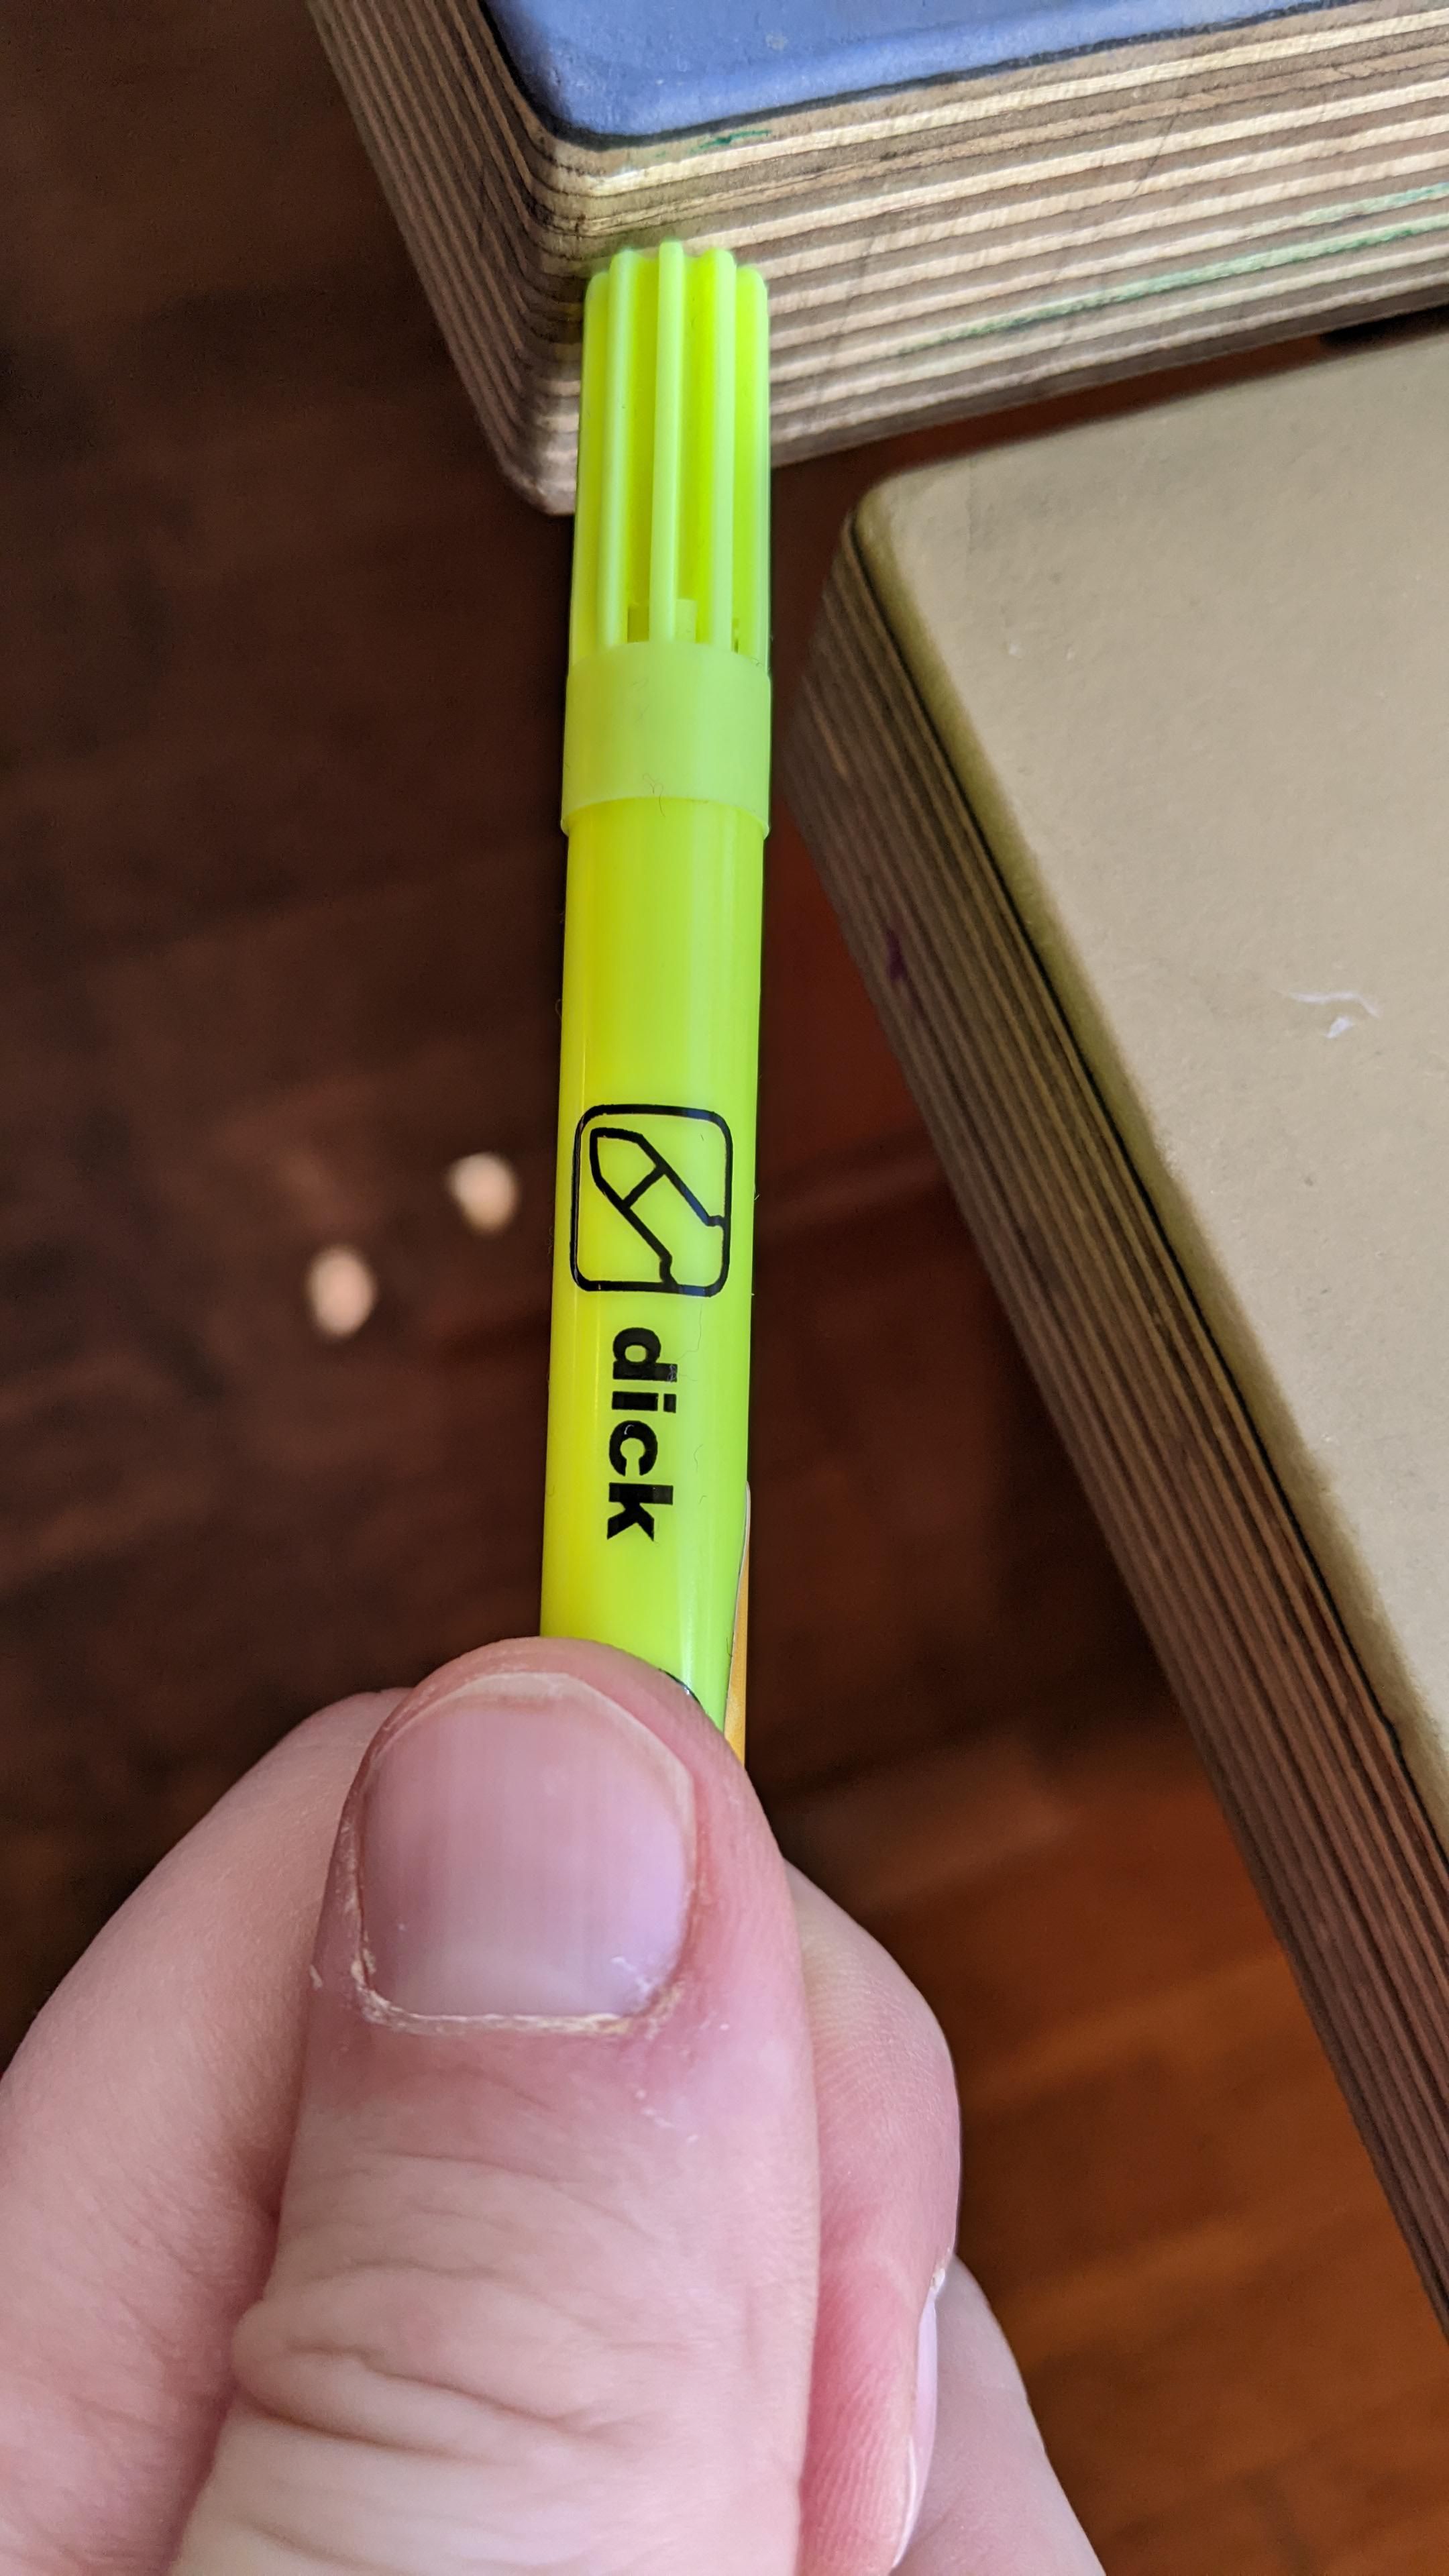 Quite the unfortunate design for a felt tip pen.